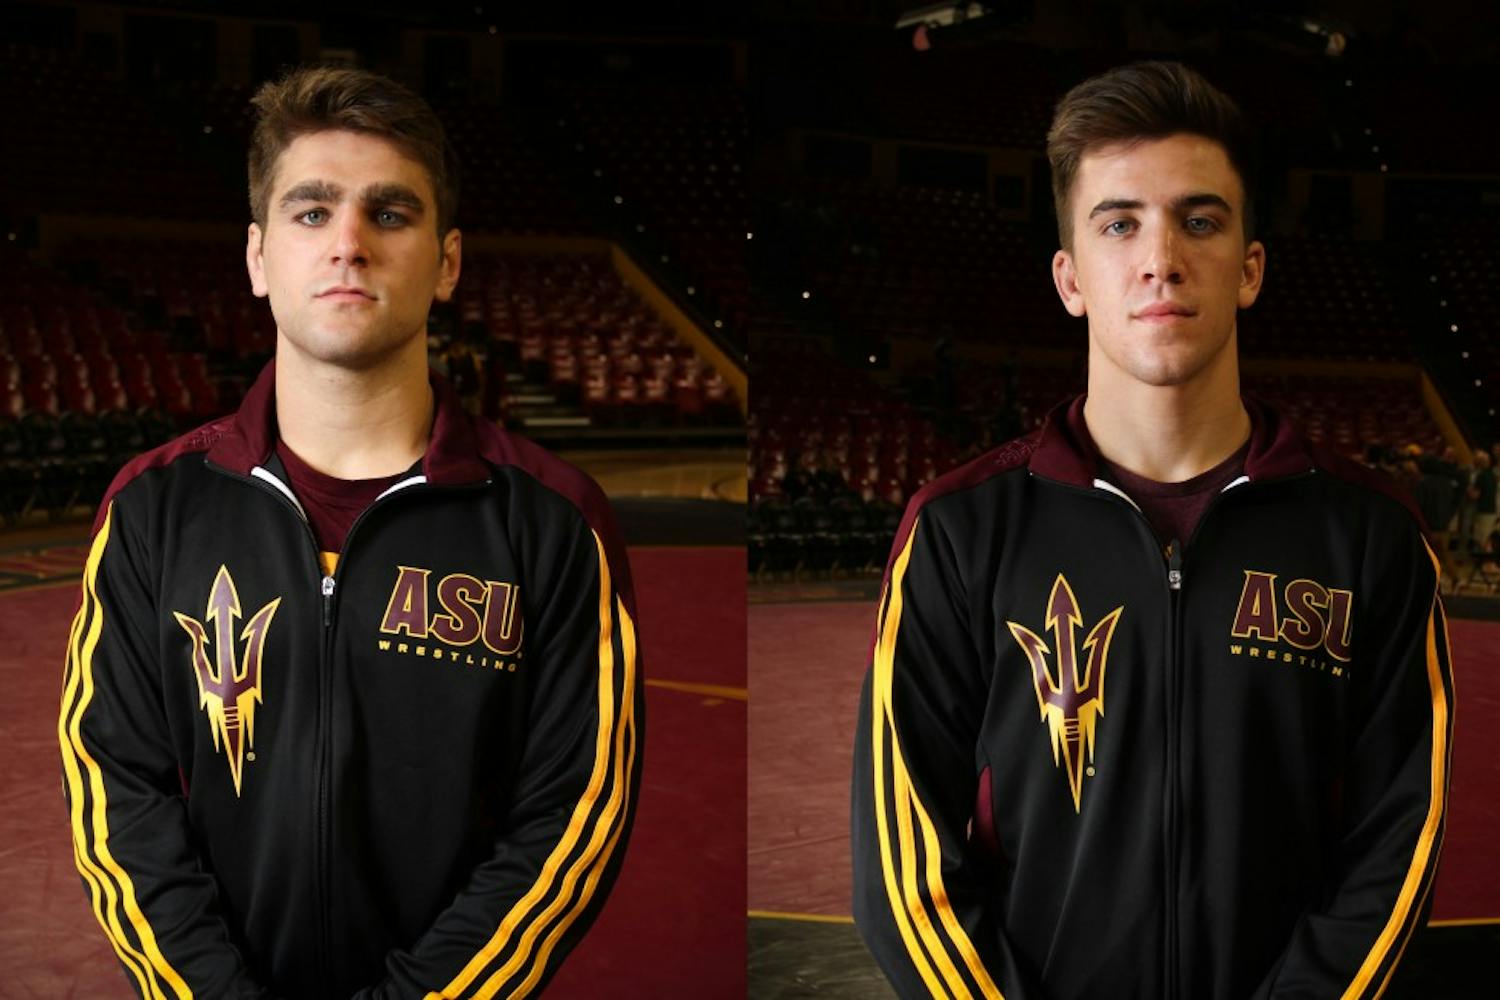 Josh Shields, left, and Josh Maruca are both redshirt freshmen on the ASU wrestling team. Portraits taken in Tempe, Arizona, on Nov. 19, 2016.